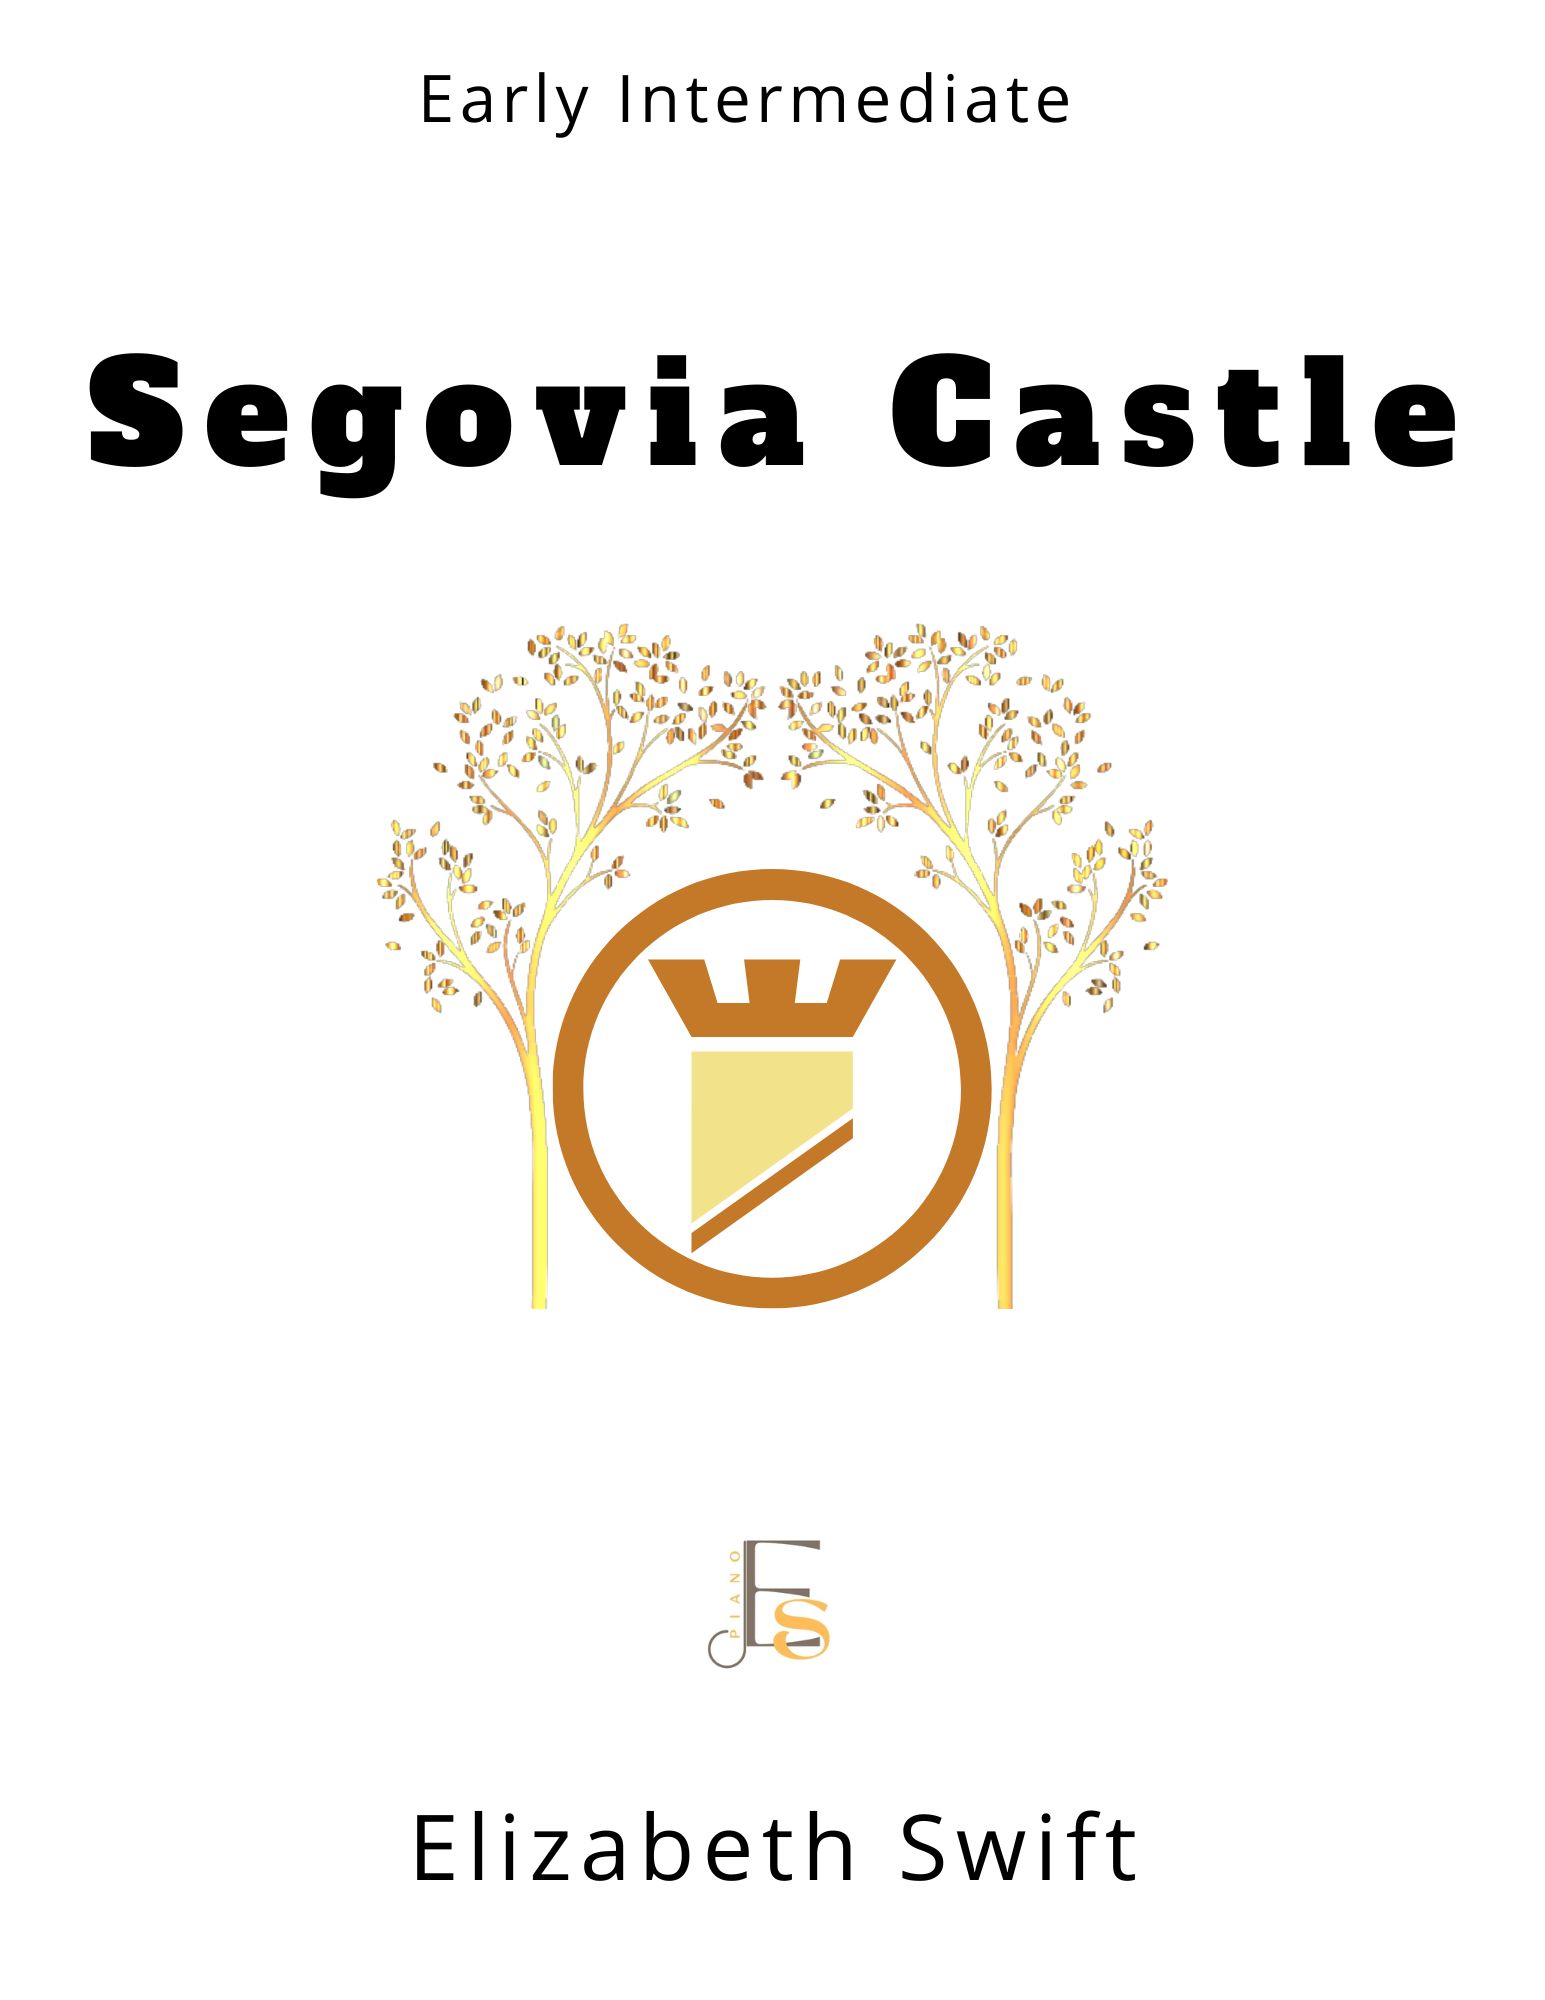 Segovia Castle Spanish Early Intermediate Piano Sheet Music